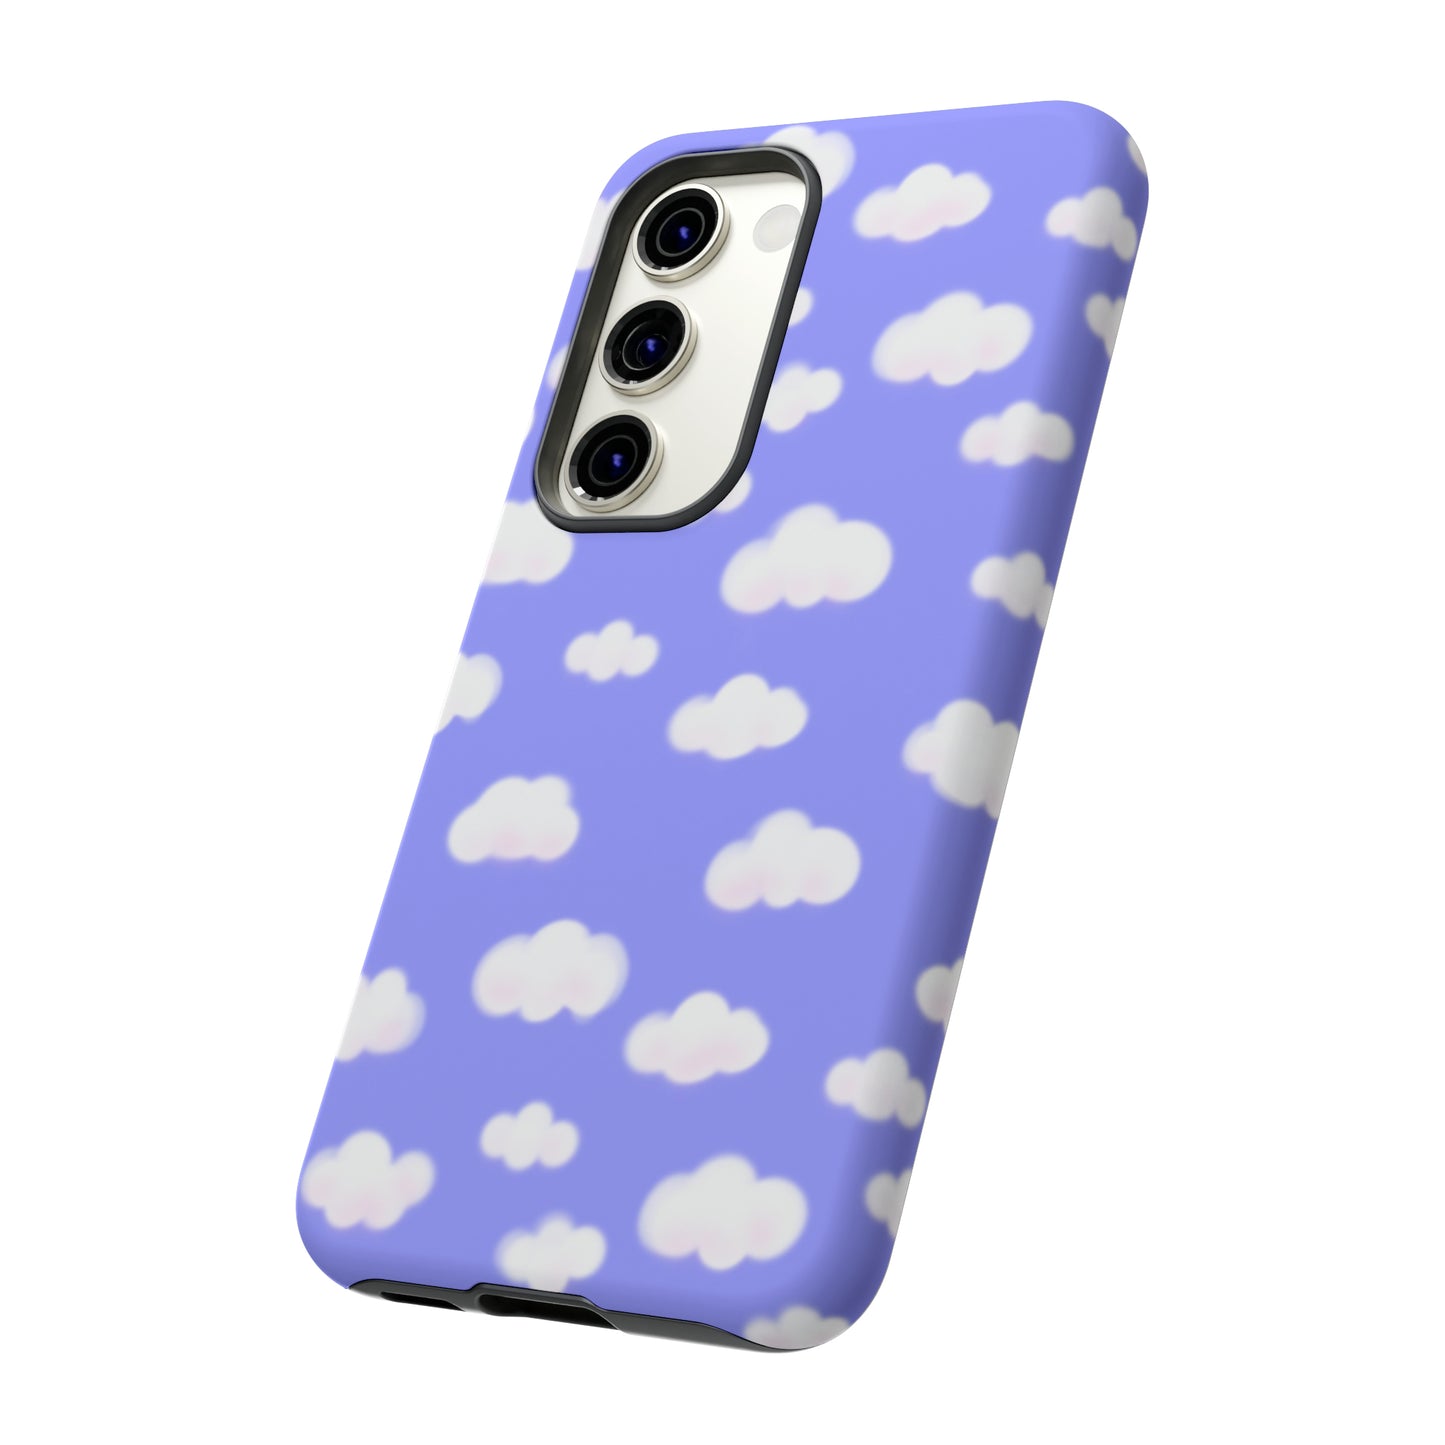 Dreamy Clouds Tough Phone Case (Periwinkle)